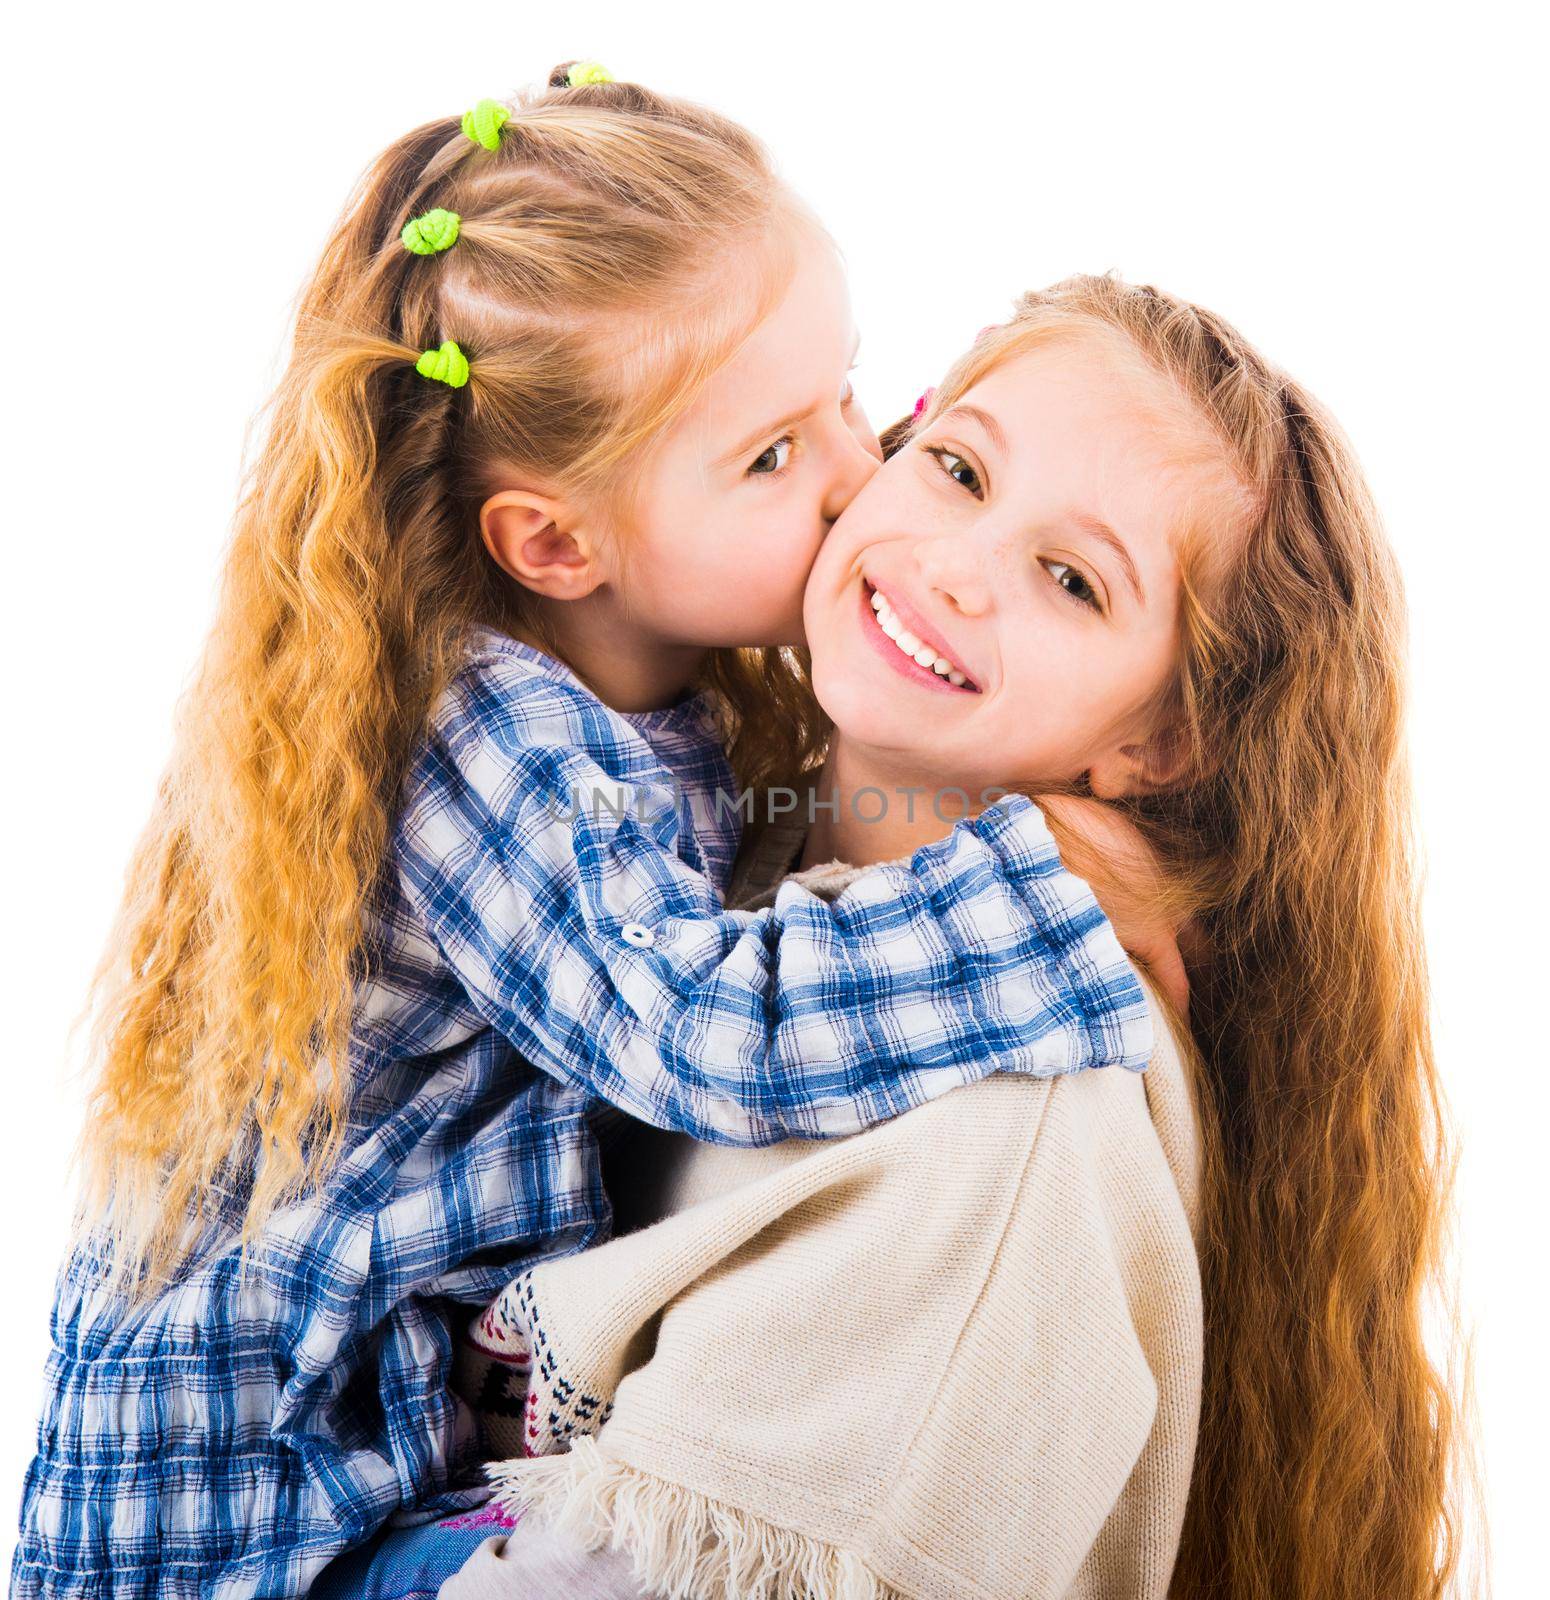 Little girl hugging and kissing her older sister by GekaSkr